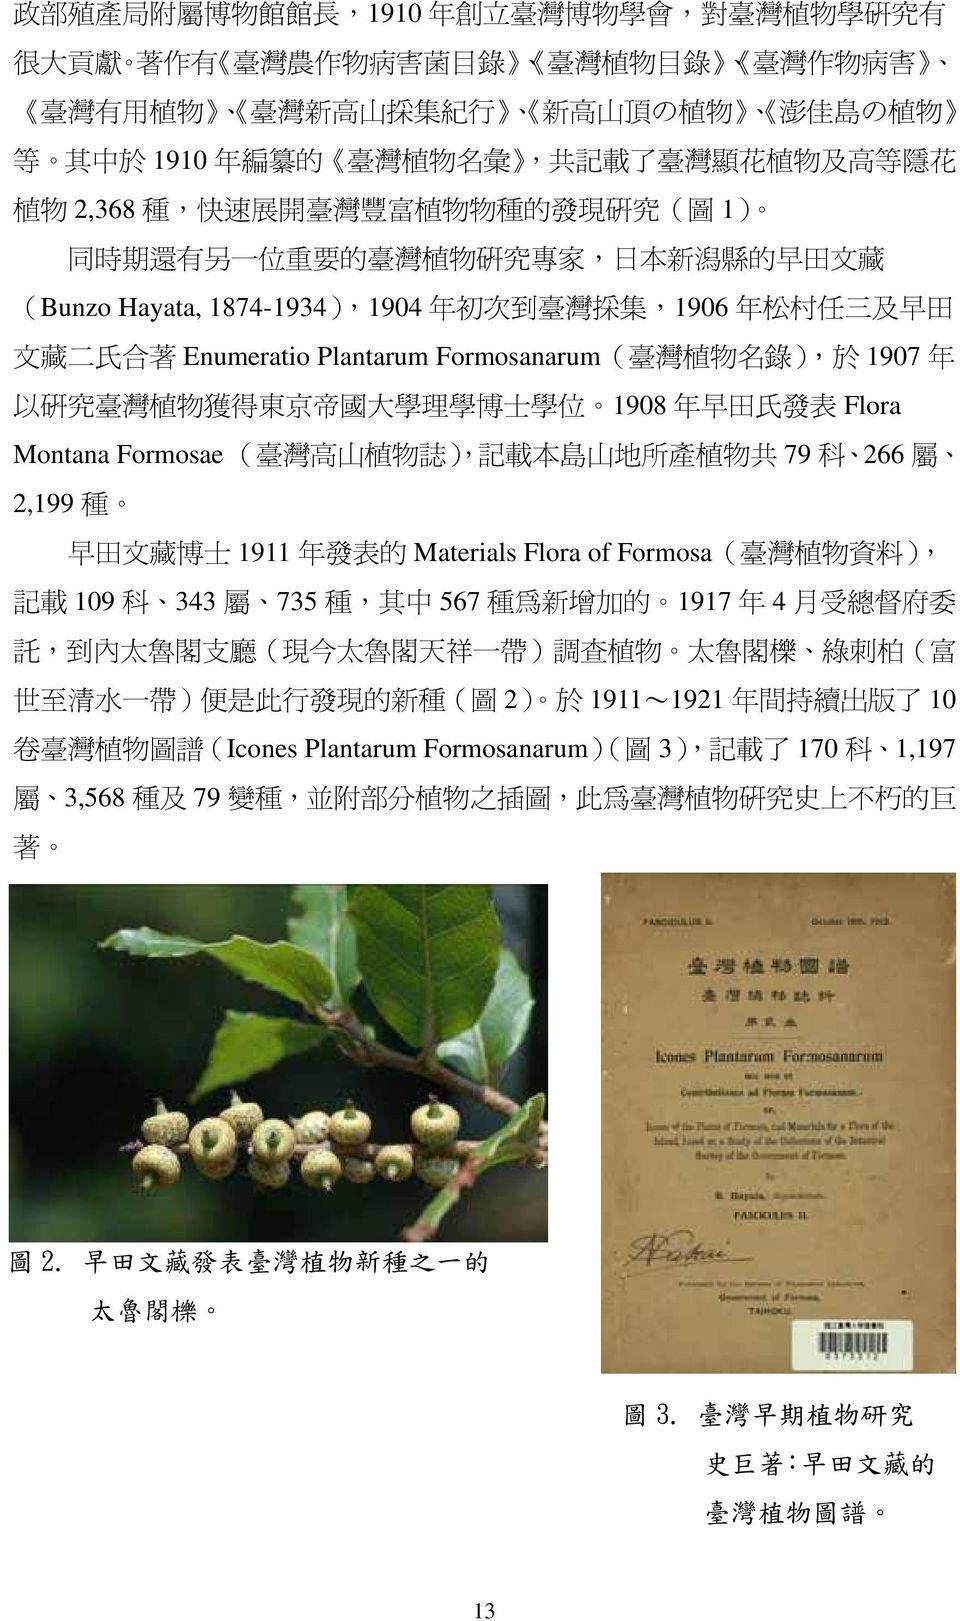 266 2,199 1911 年 Materials Flora of Formosa 料 109 343 735 567 1917 年 4 魯 魯 魯